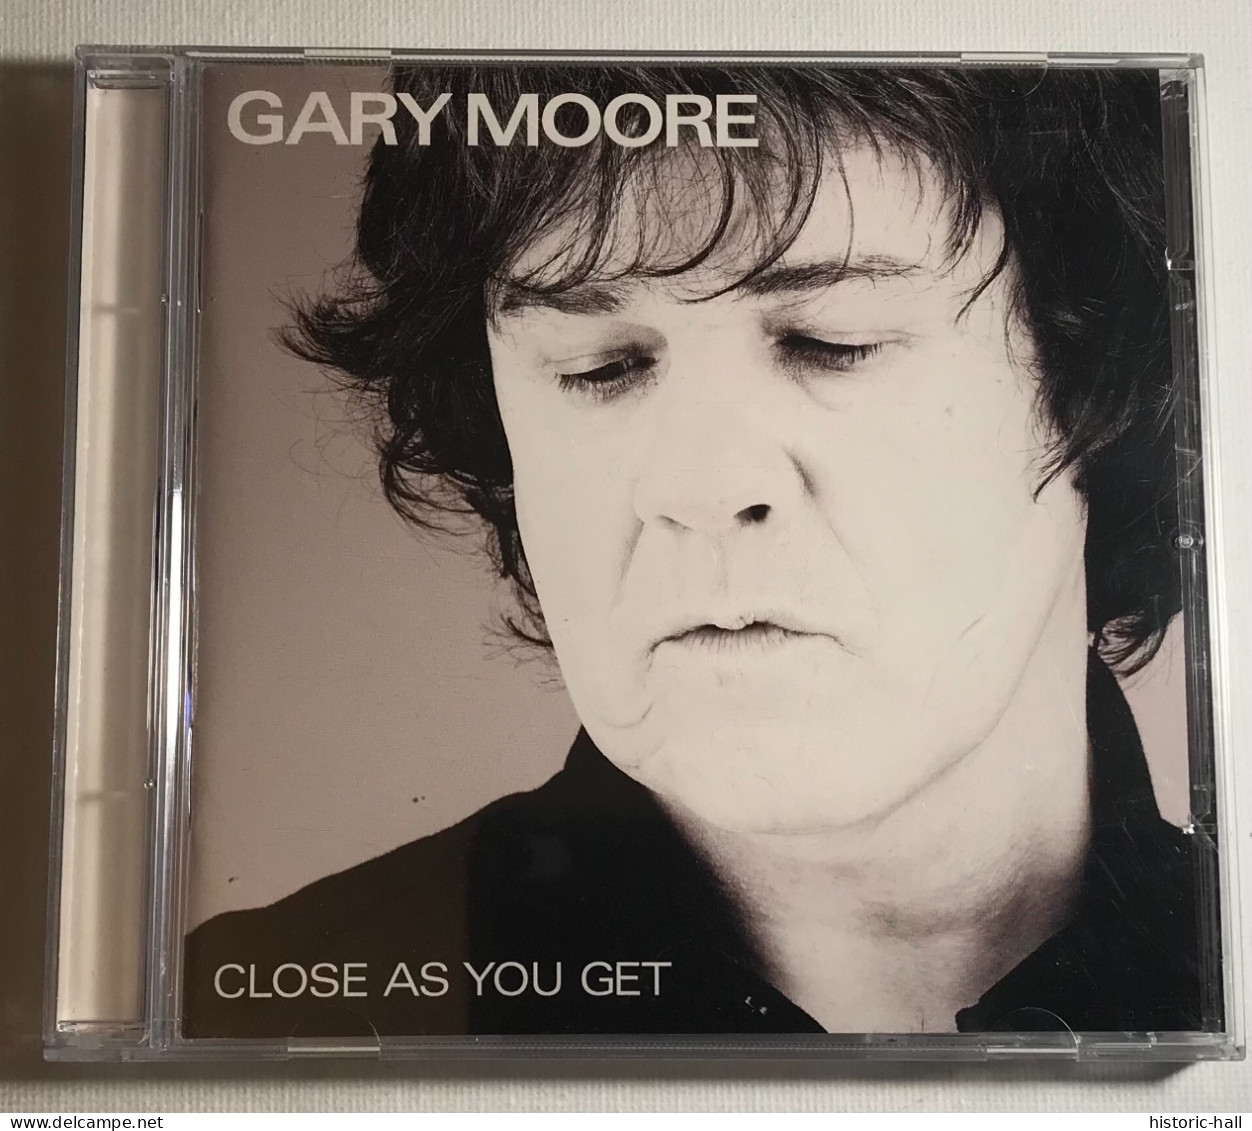 GARY MOORE - Close As You Get - CD - 2007 - German Press - Blues